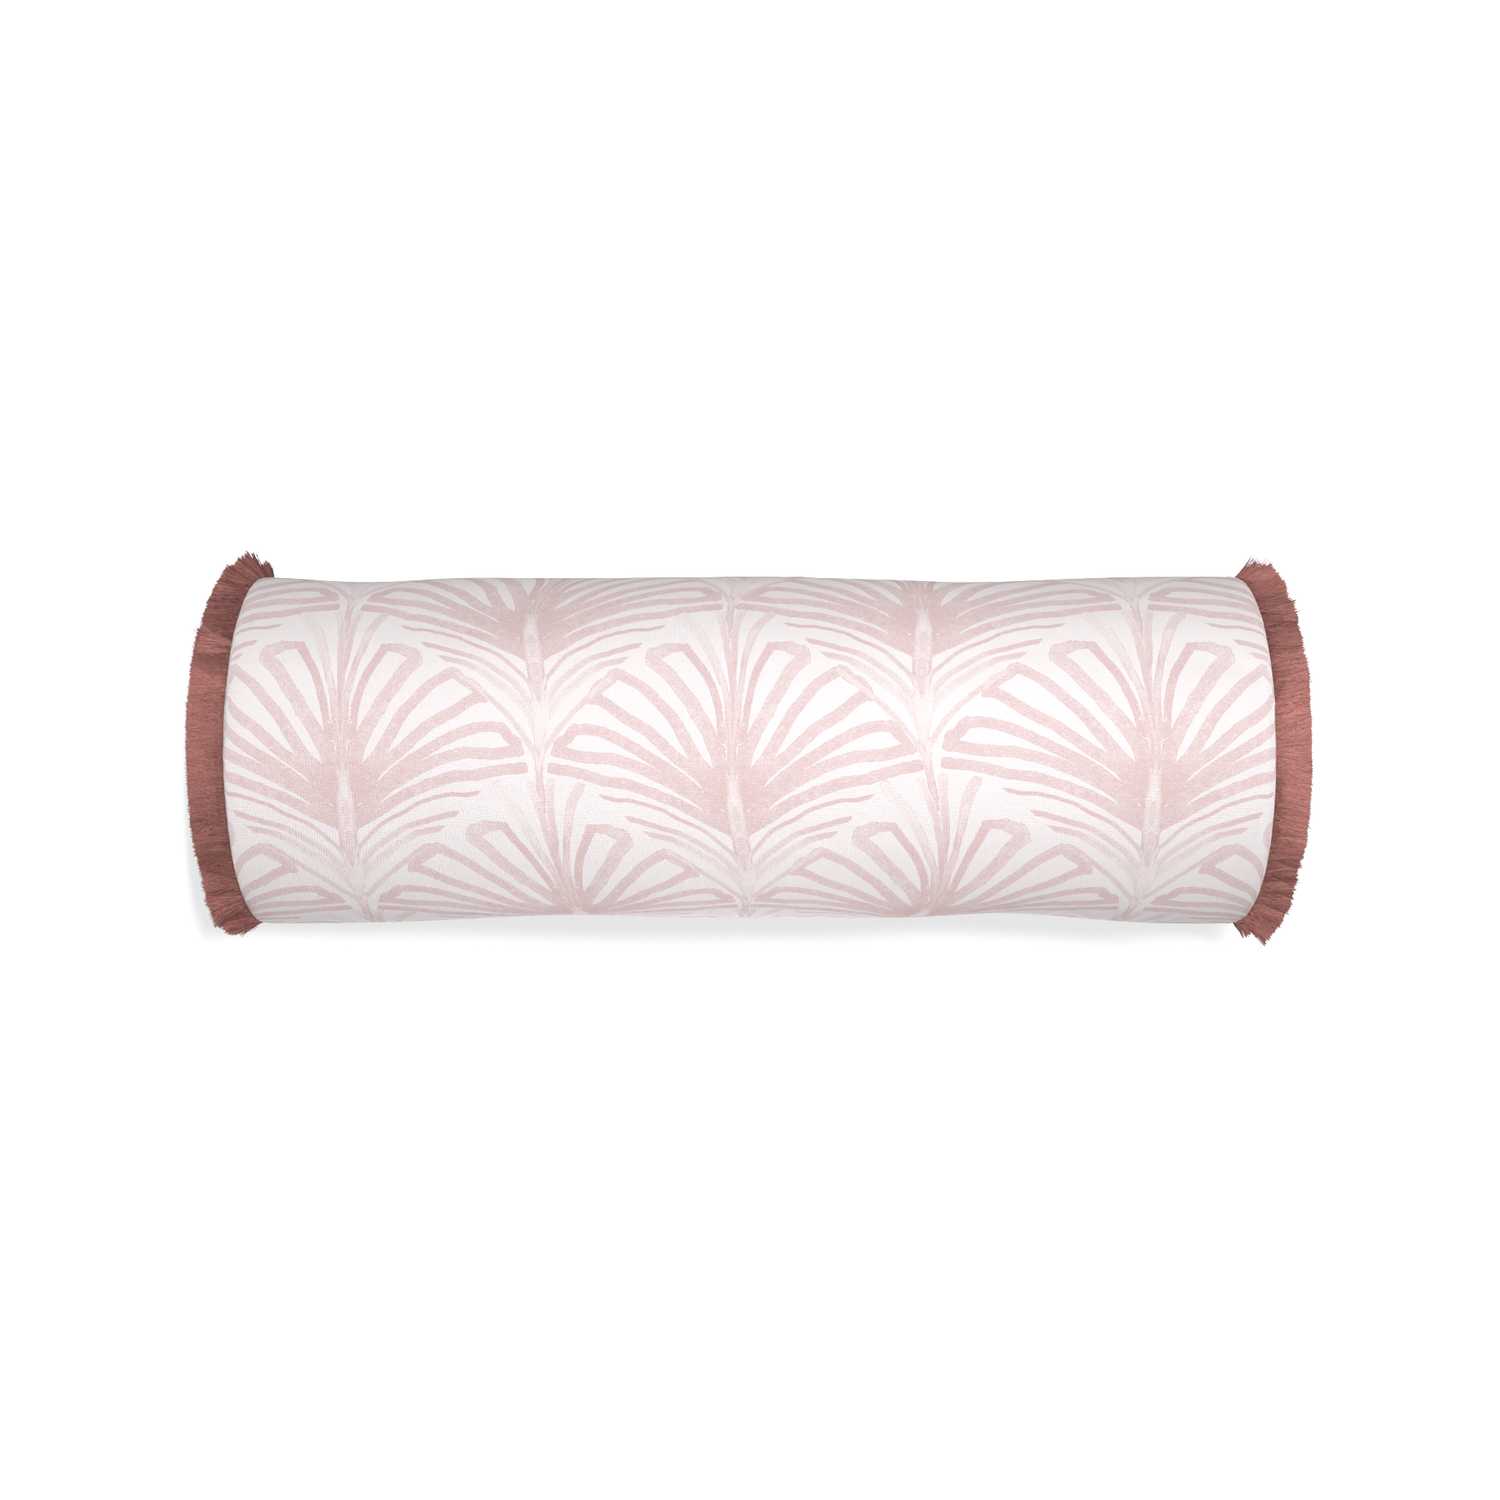 Bolster suzy rose custom pillow with d fringe on white background